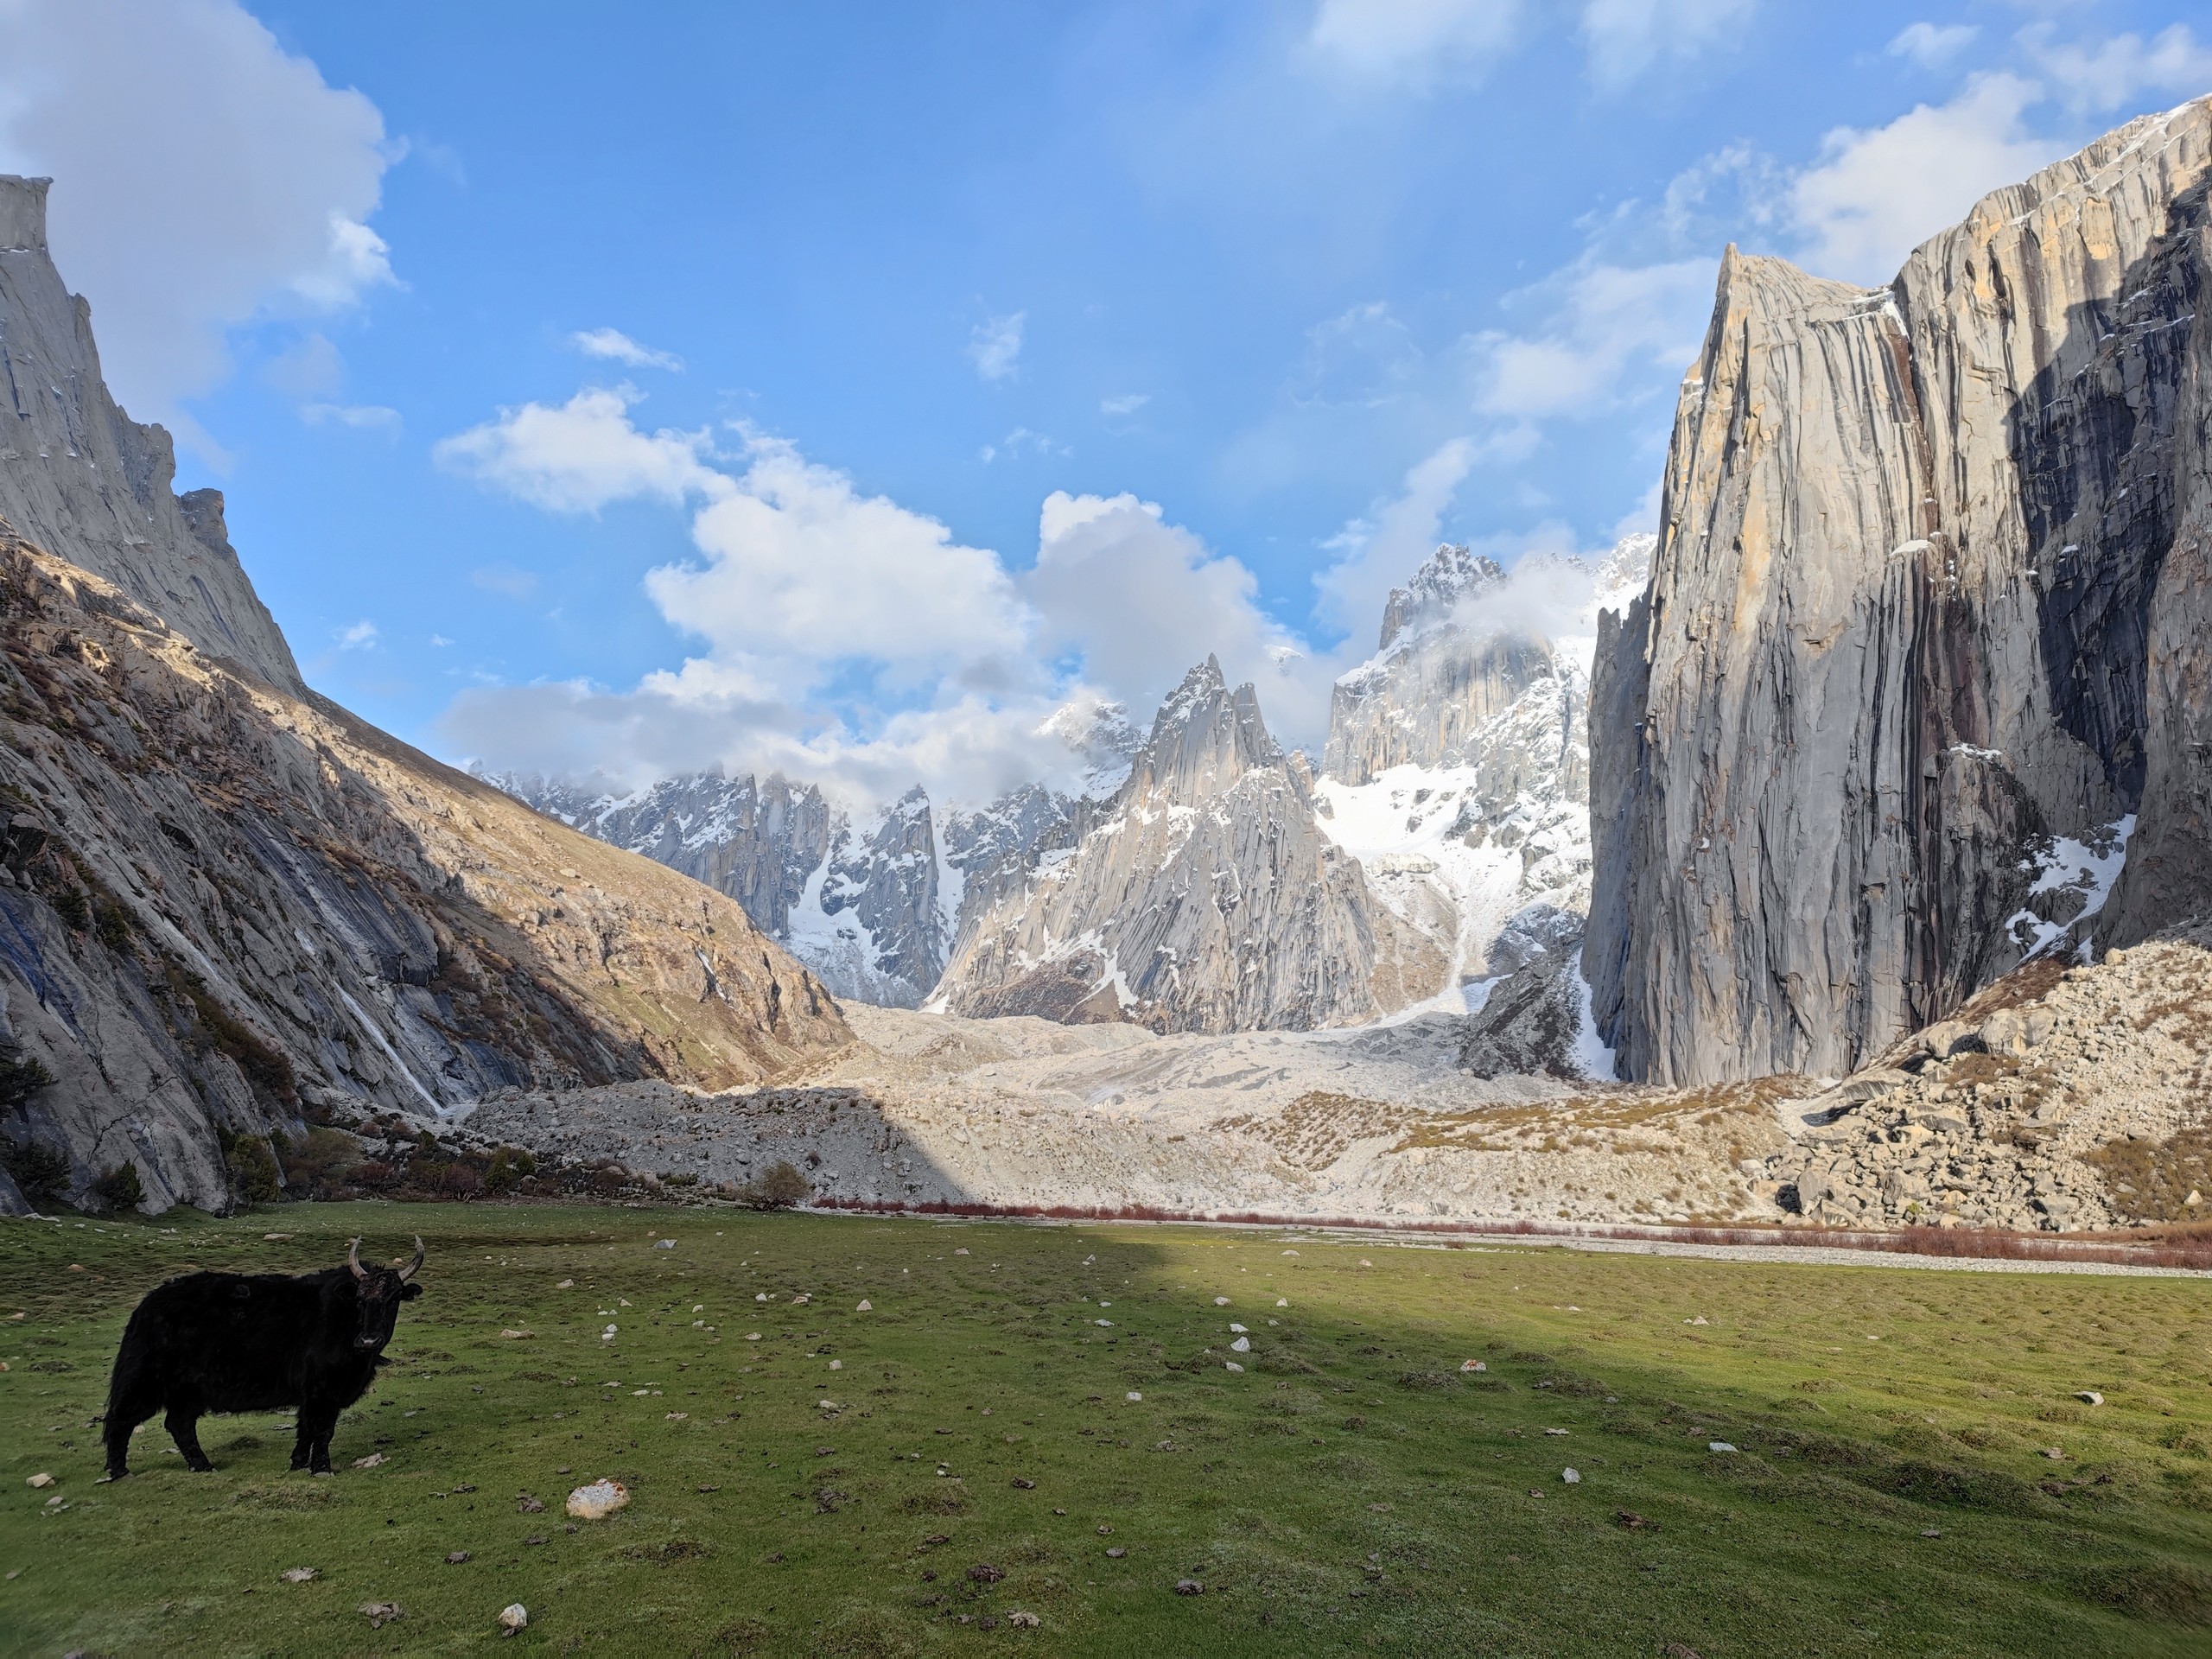 Nangma Valley seen while trekking in Baltistan region